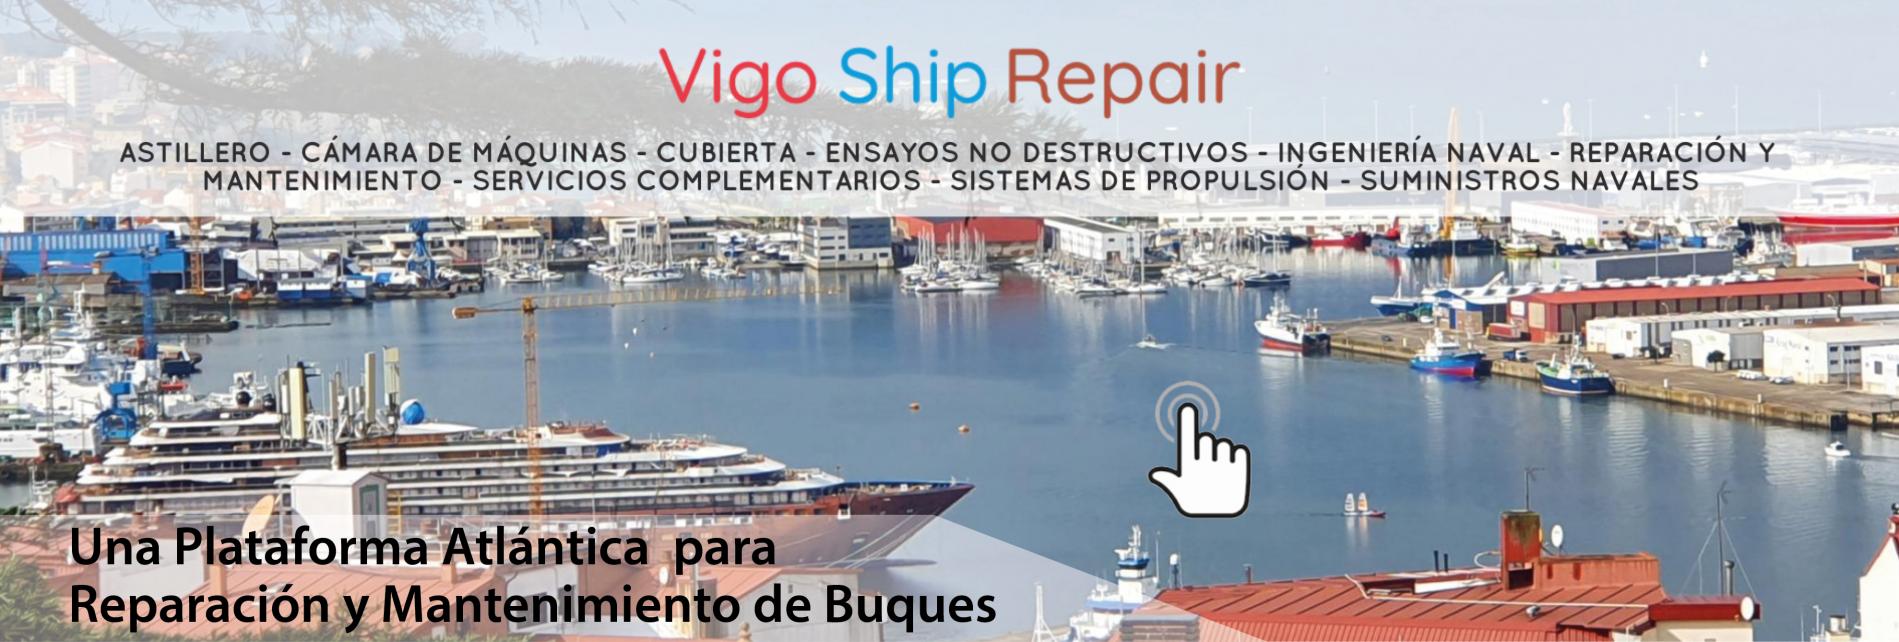 Vigo Ship Repair